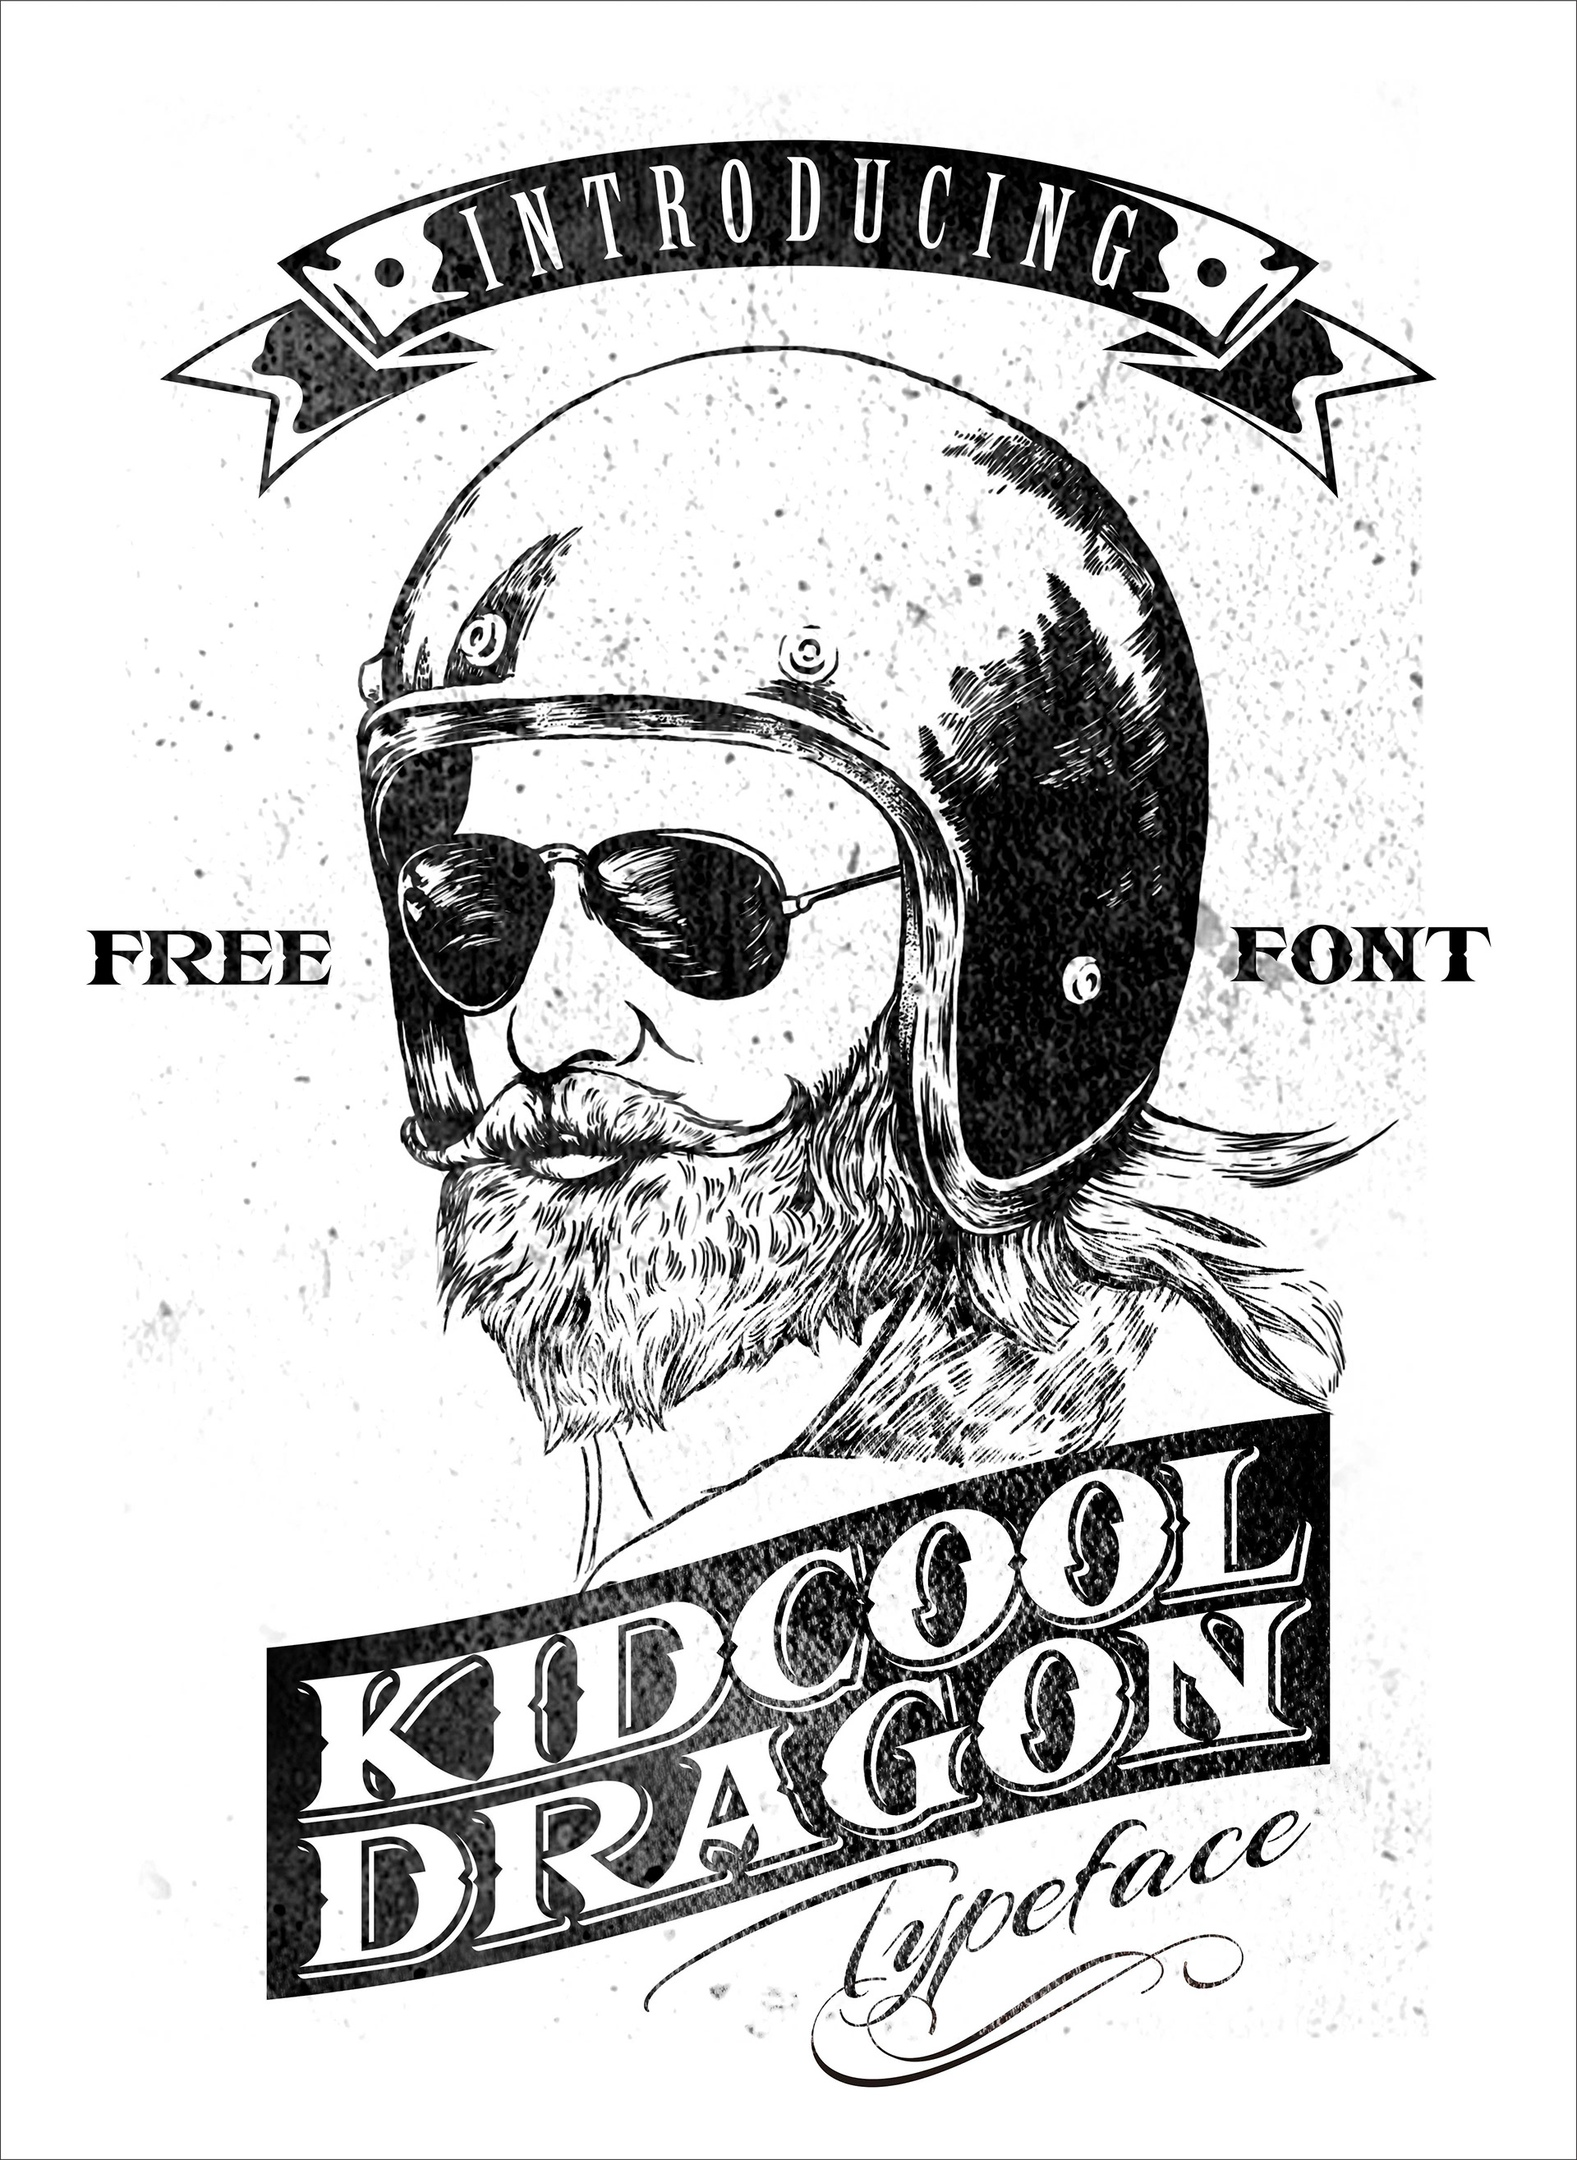 Kidcool Dragon